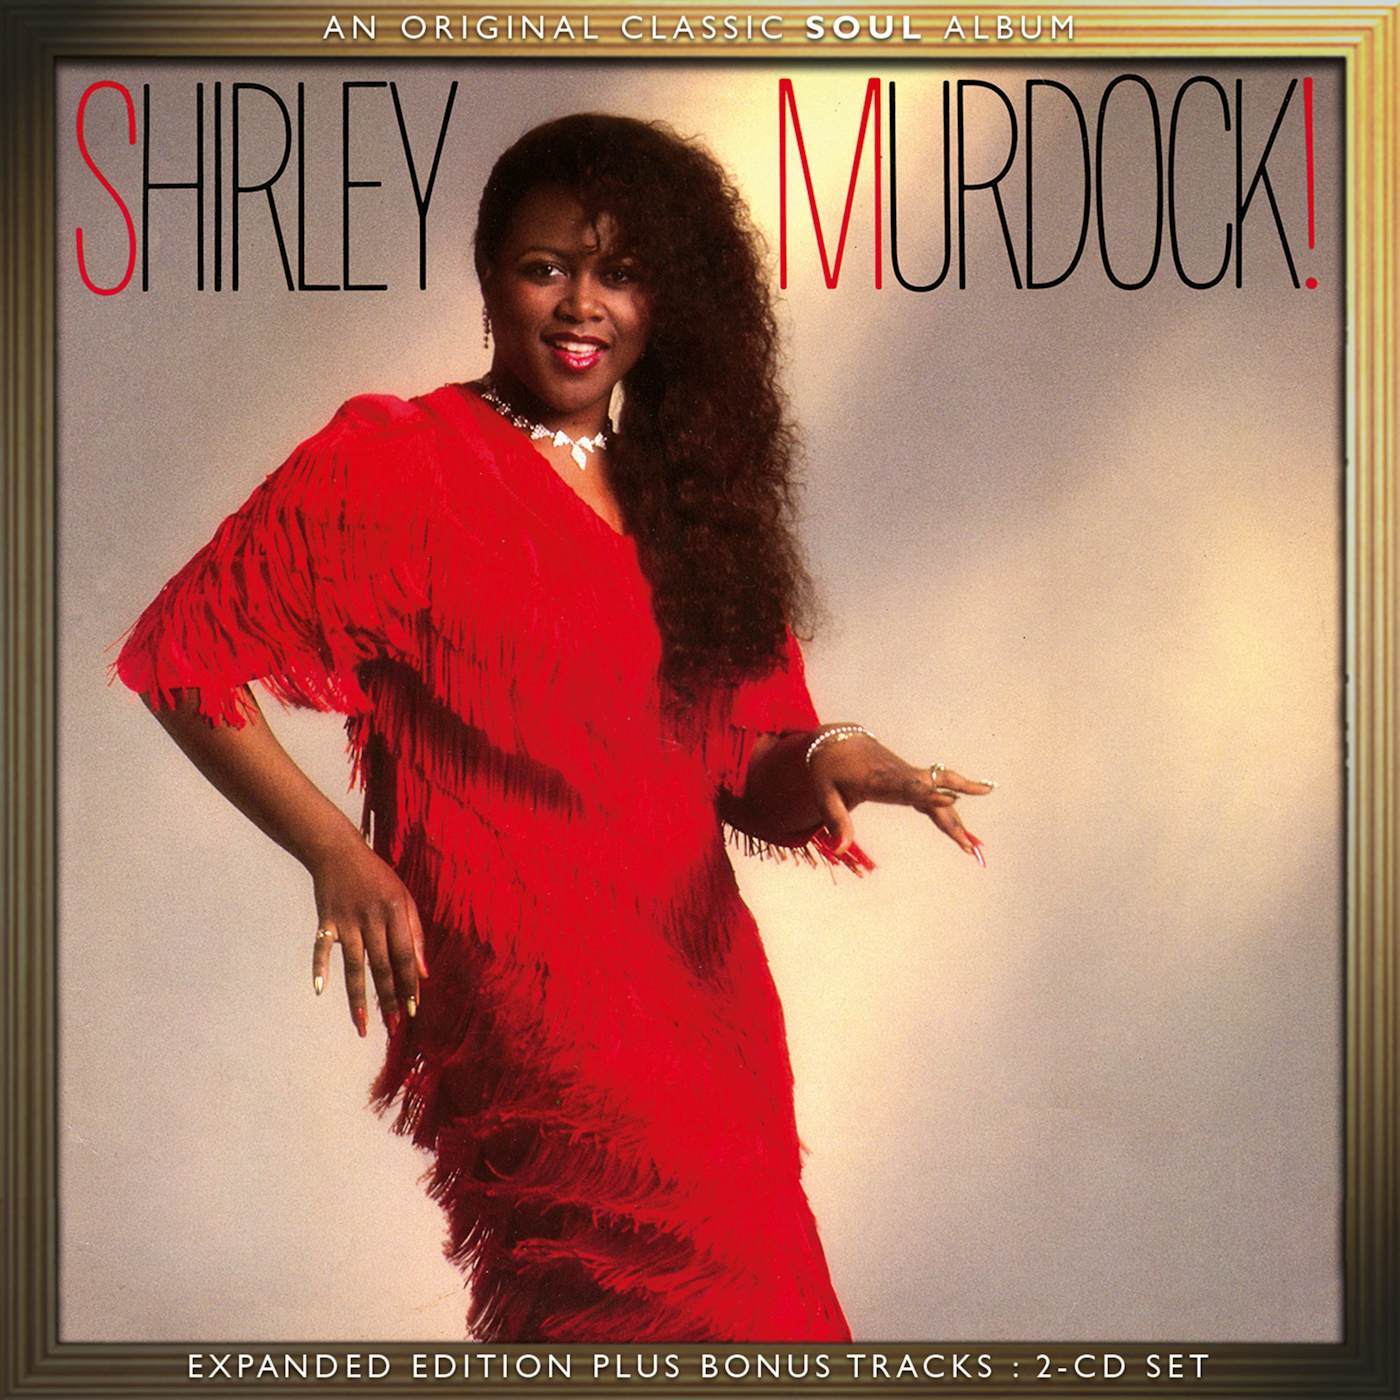 SHIRLEY MURDOCK CD